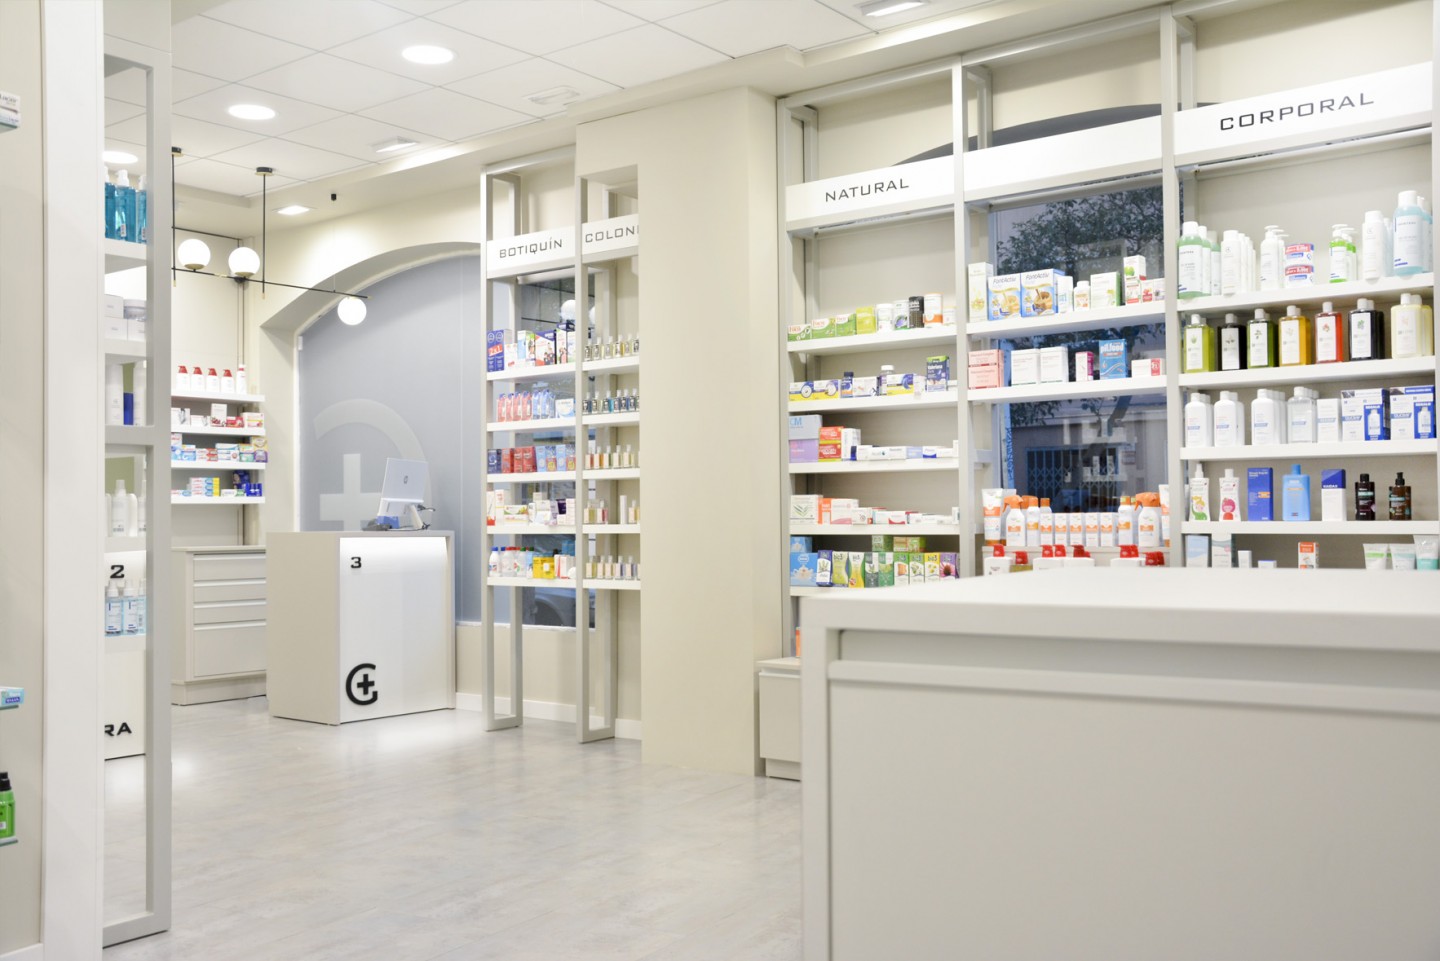 Reforma de Farmacia en Zaragoza